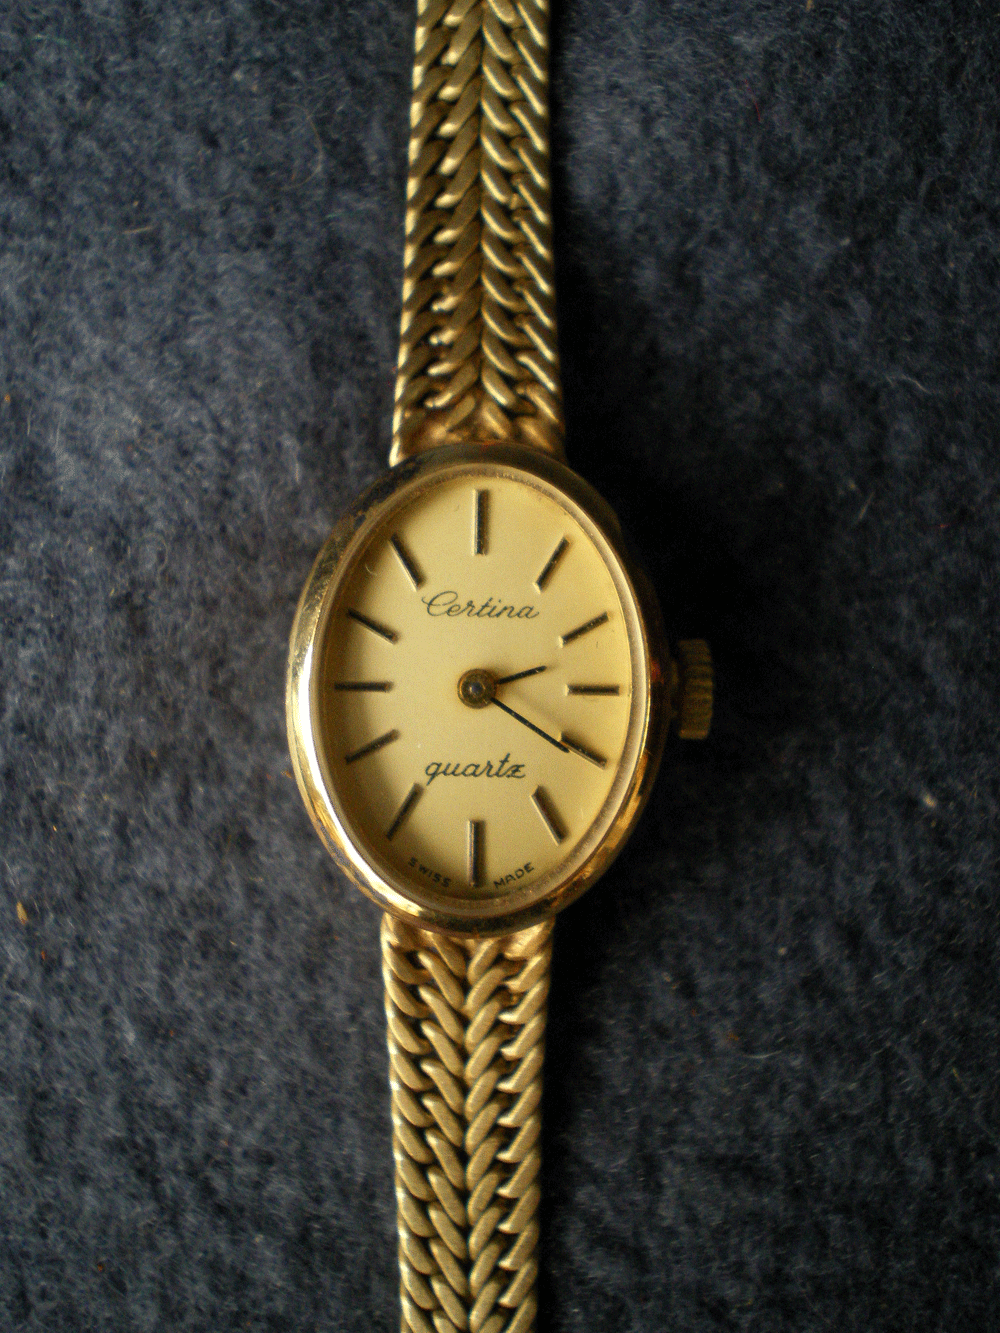 Damen-Armbanduhr, 585/- GG, Certina Quartz swiss made, 19,85g - Bild 4 aus 5